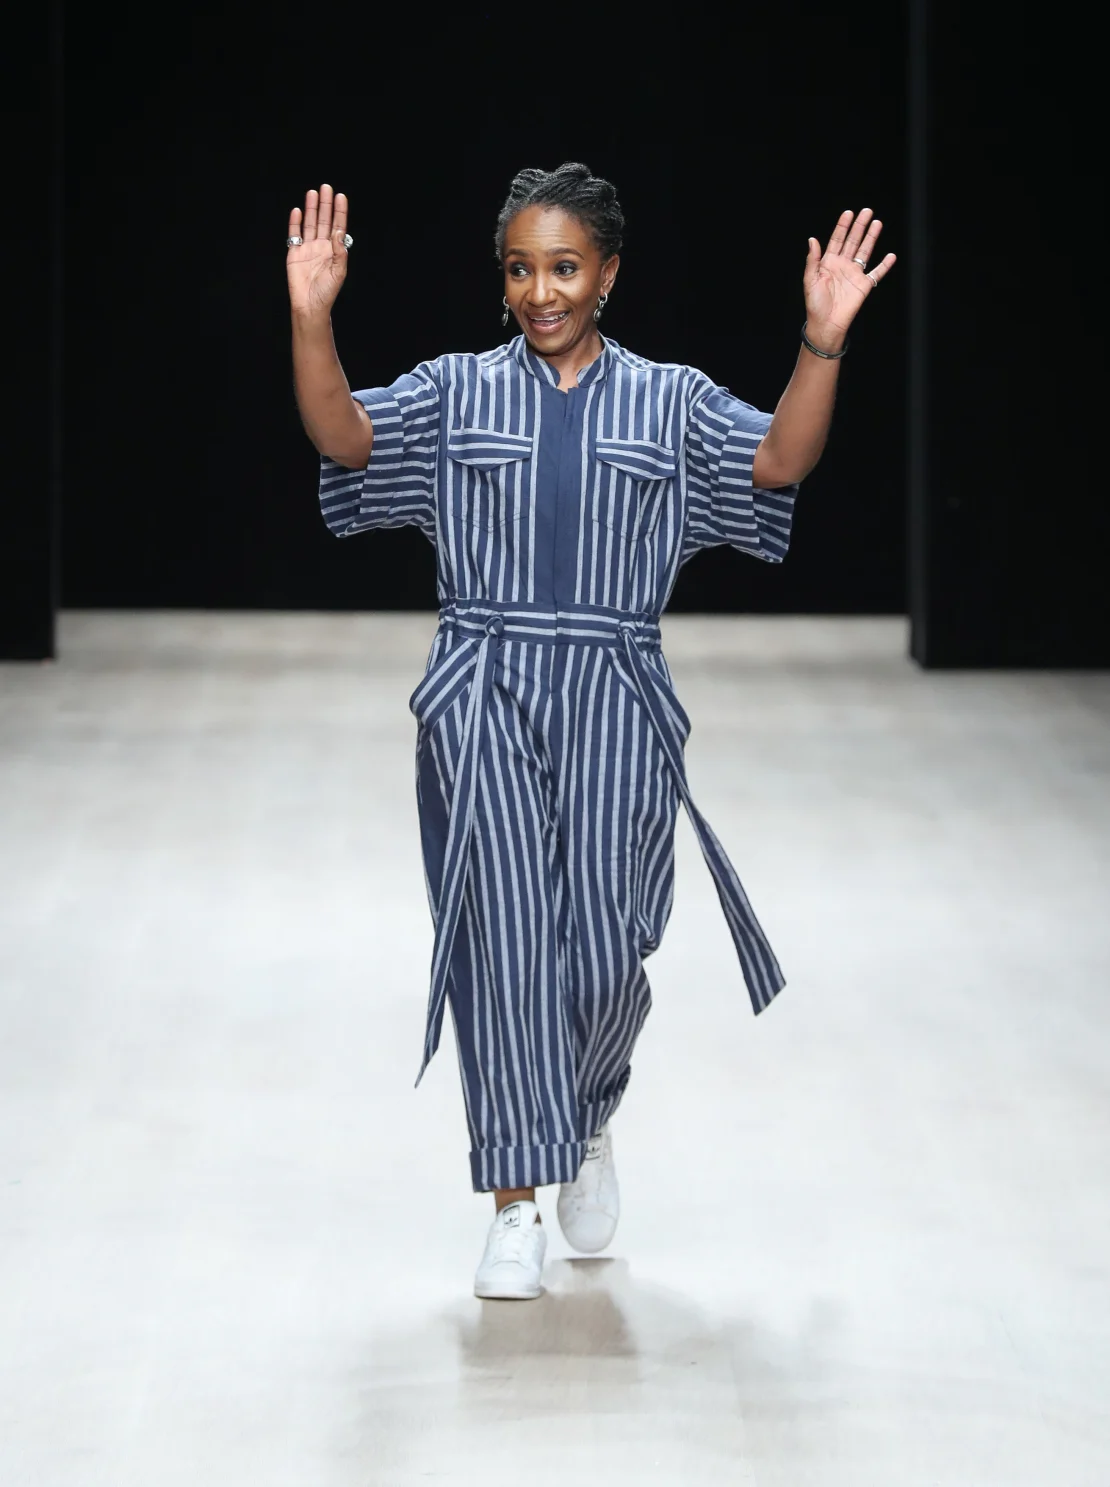 Nkwo Onwuka: A Trailblazer in Sustainable Fashion